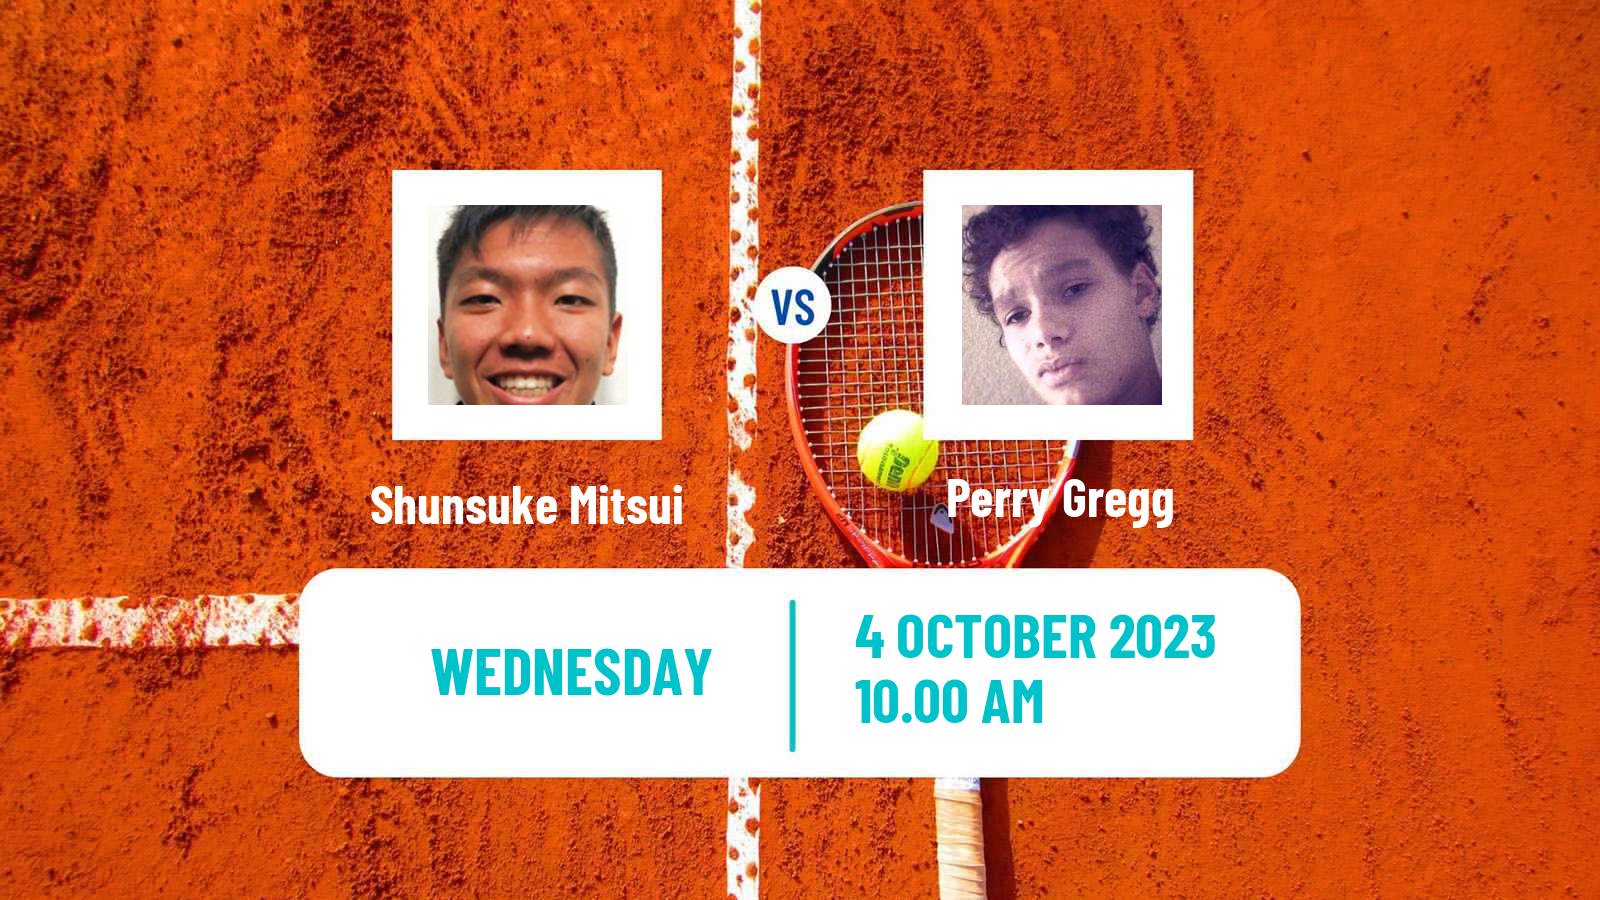 Tennis ITF M15 Ithaca Ny 2 Men Shunsuke Mitsui - Perry Gregg